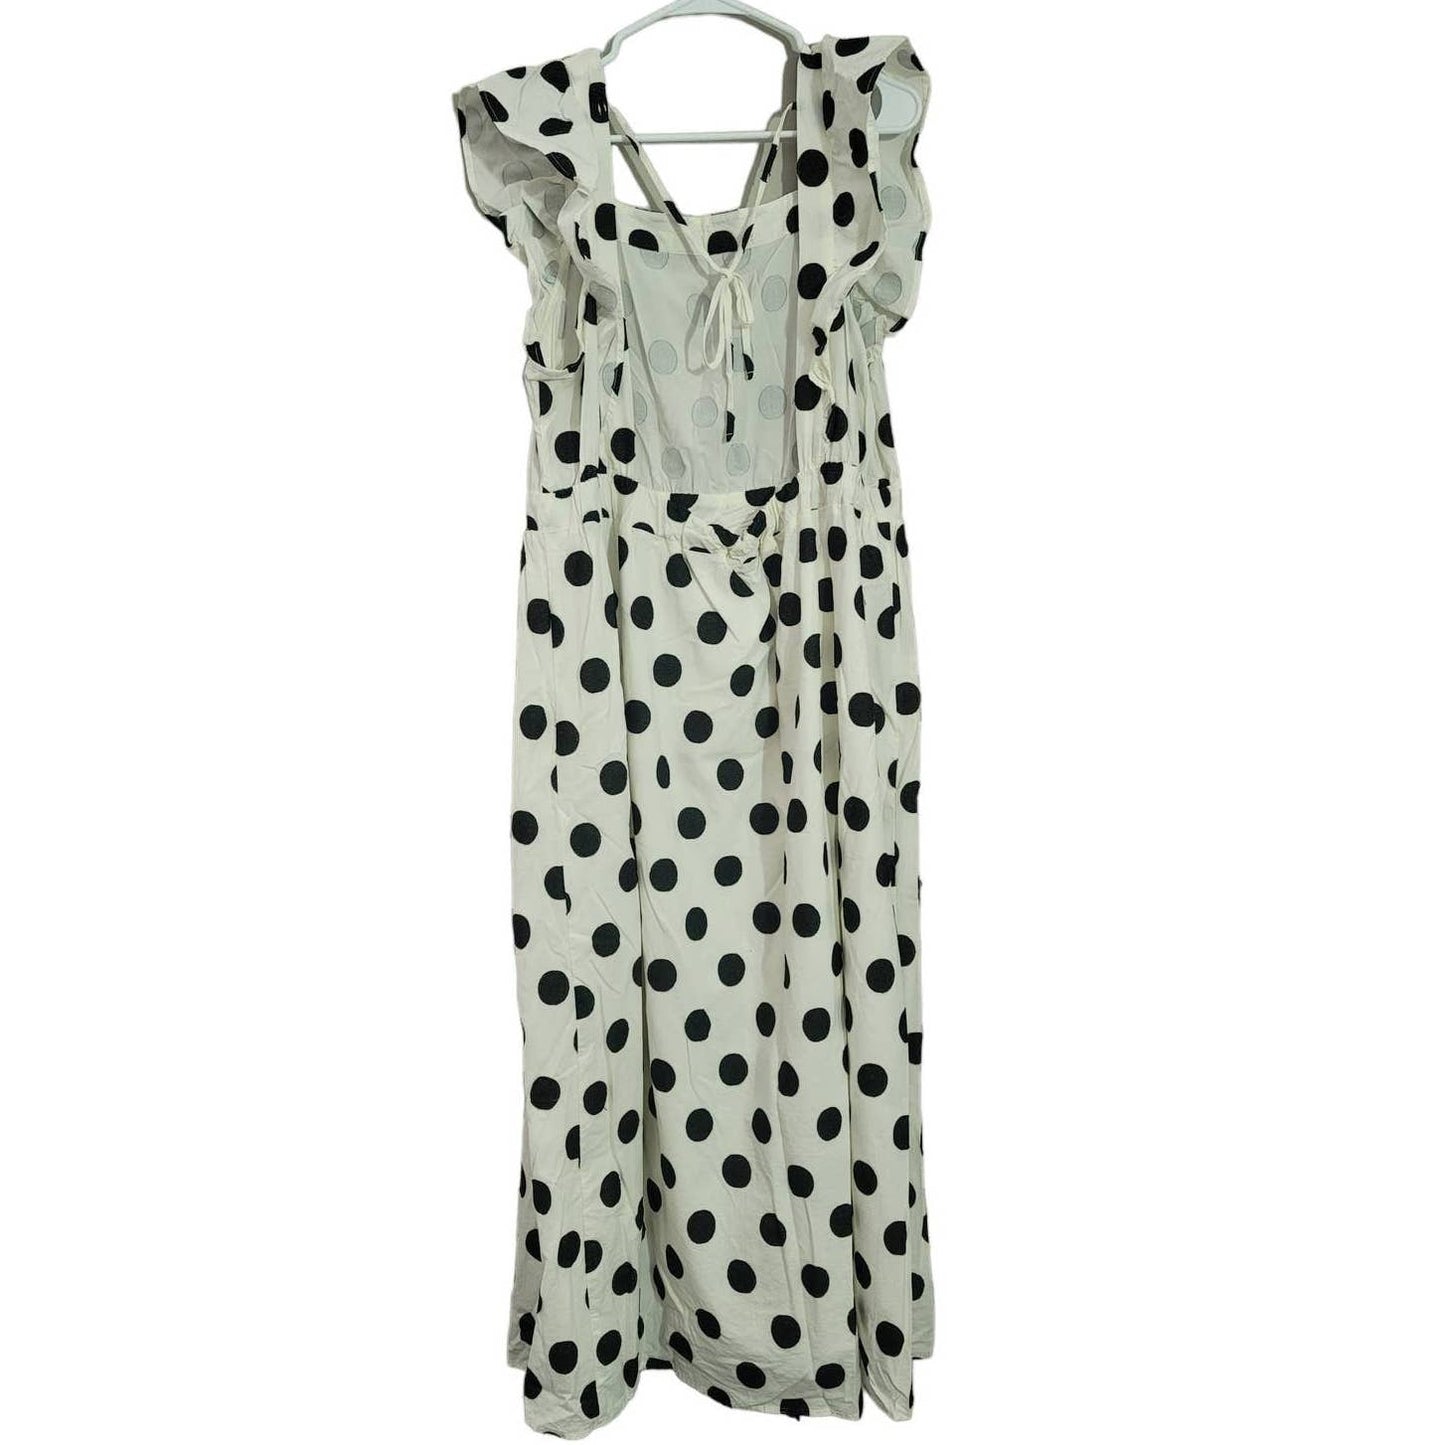 Amadi Anthropologie Maxi Dress Black White Polka Dots Flutter Sleeve Size 1X